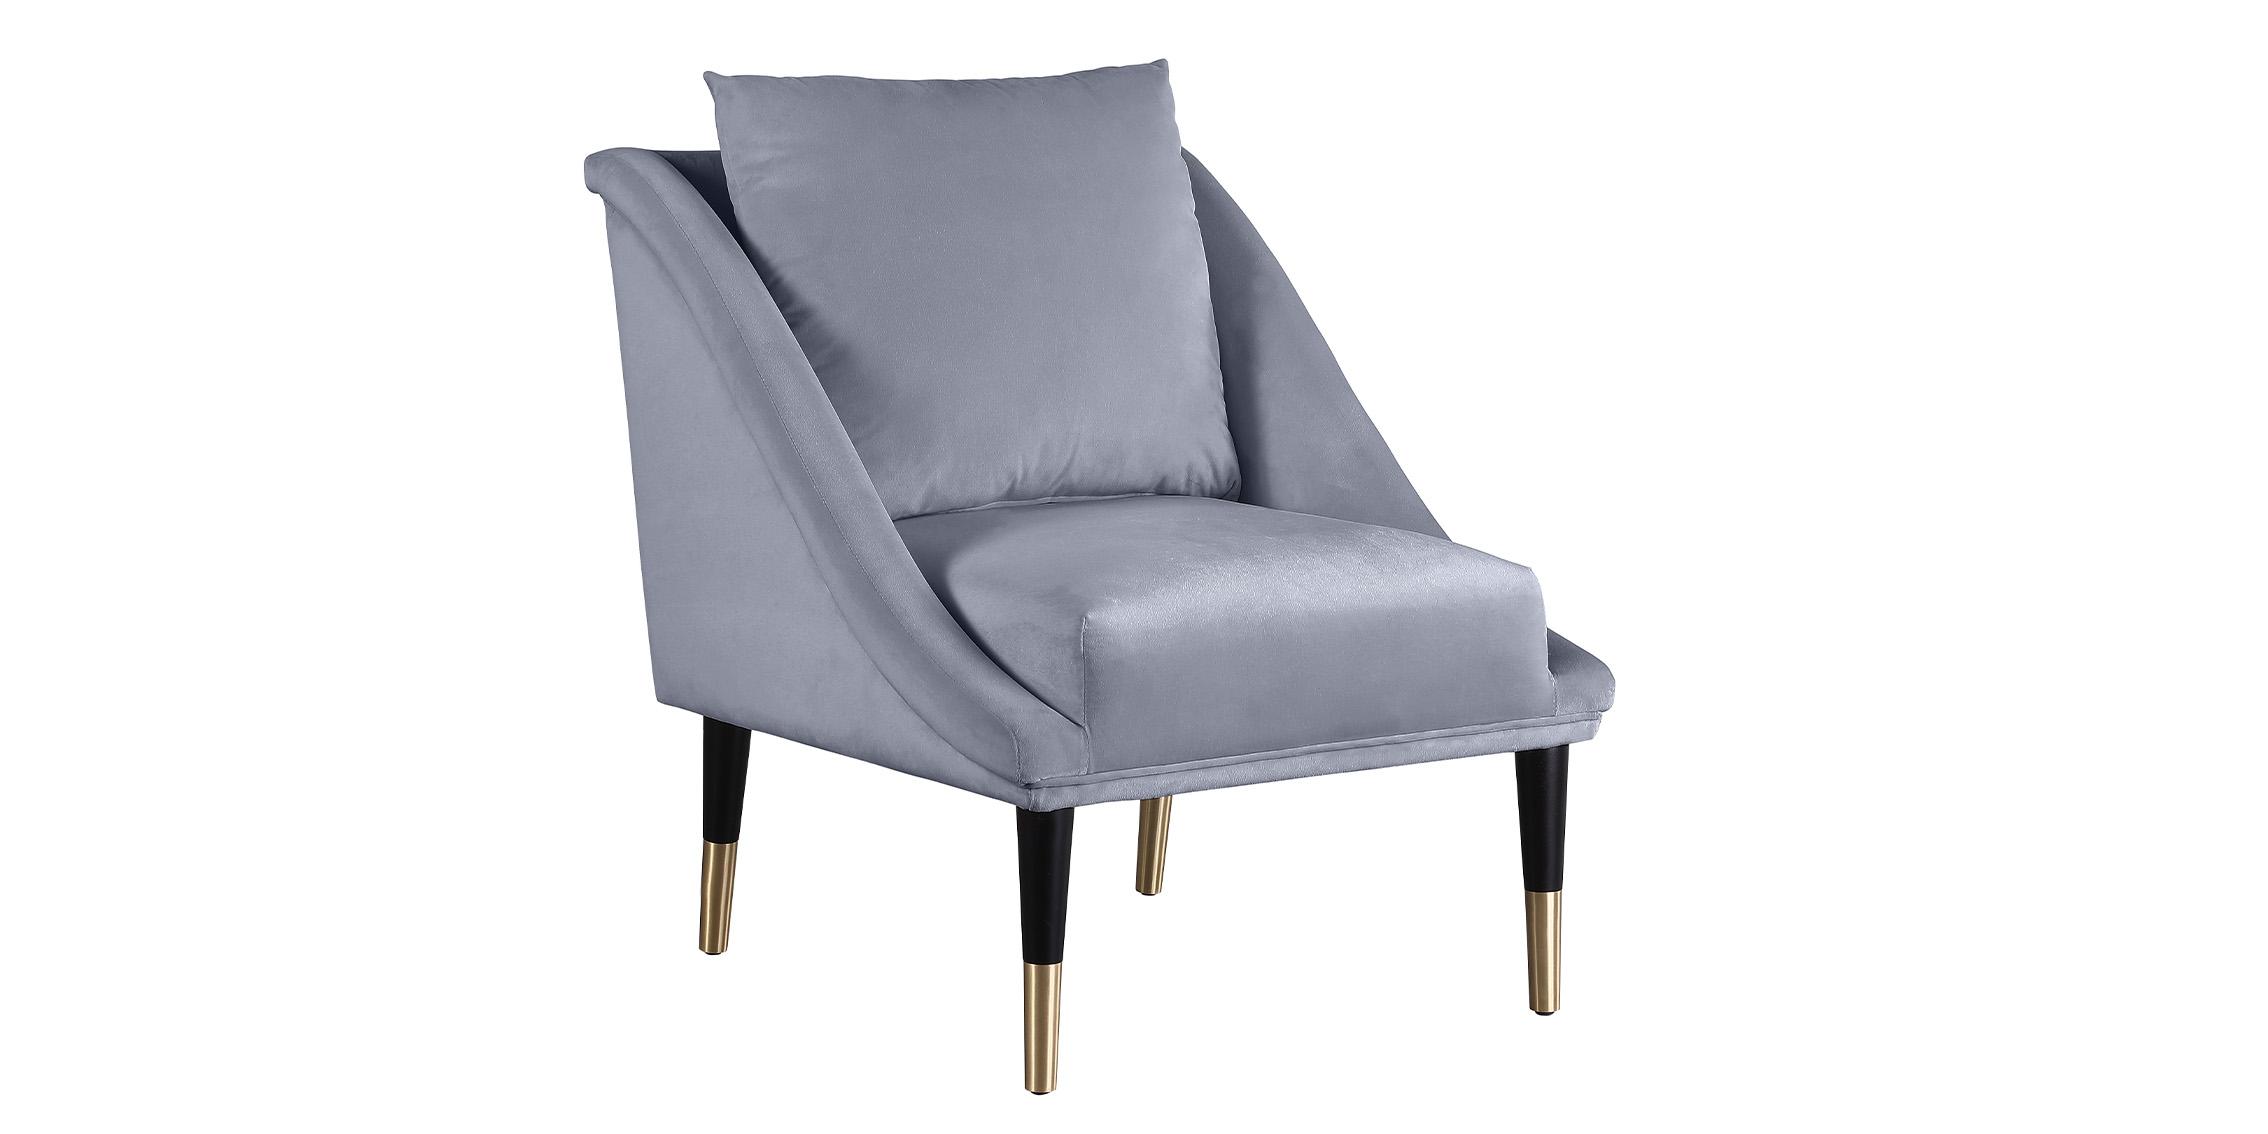 Contemporary, Modern Accent Chair ELEGANTE 517Grey-C 517Grey-C in Gray Velvet